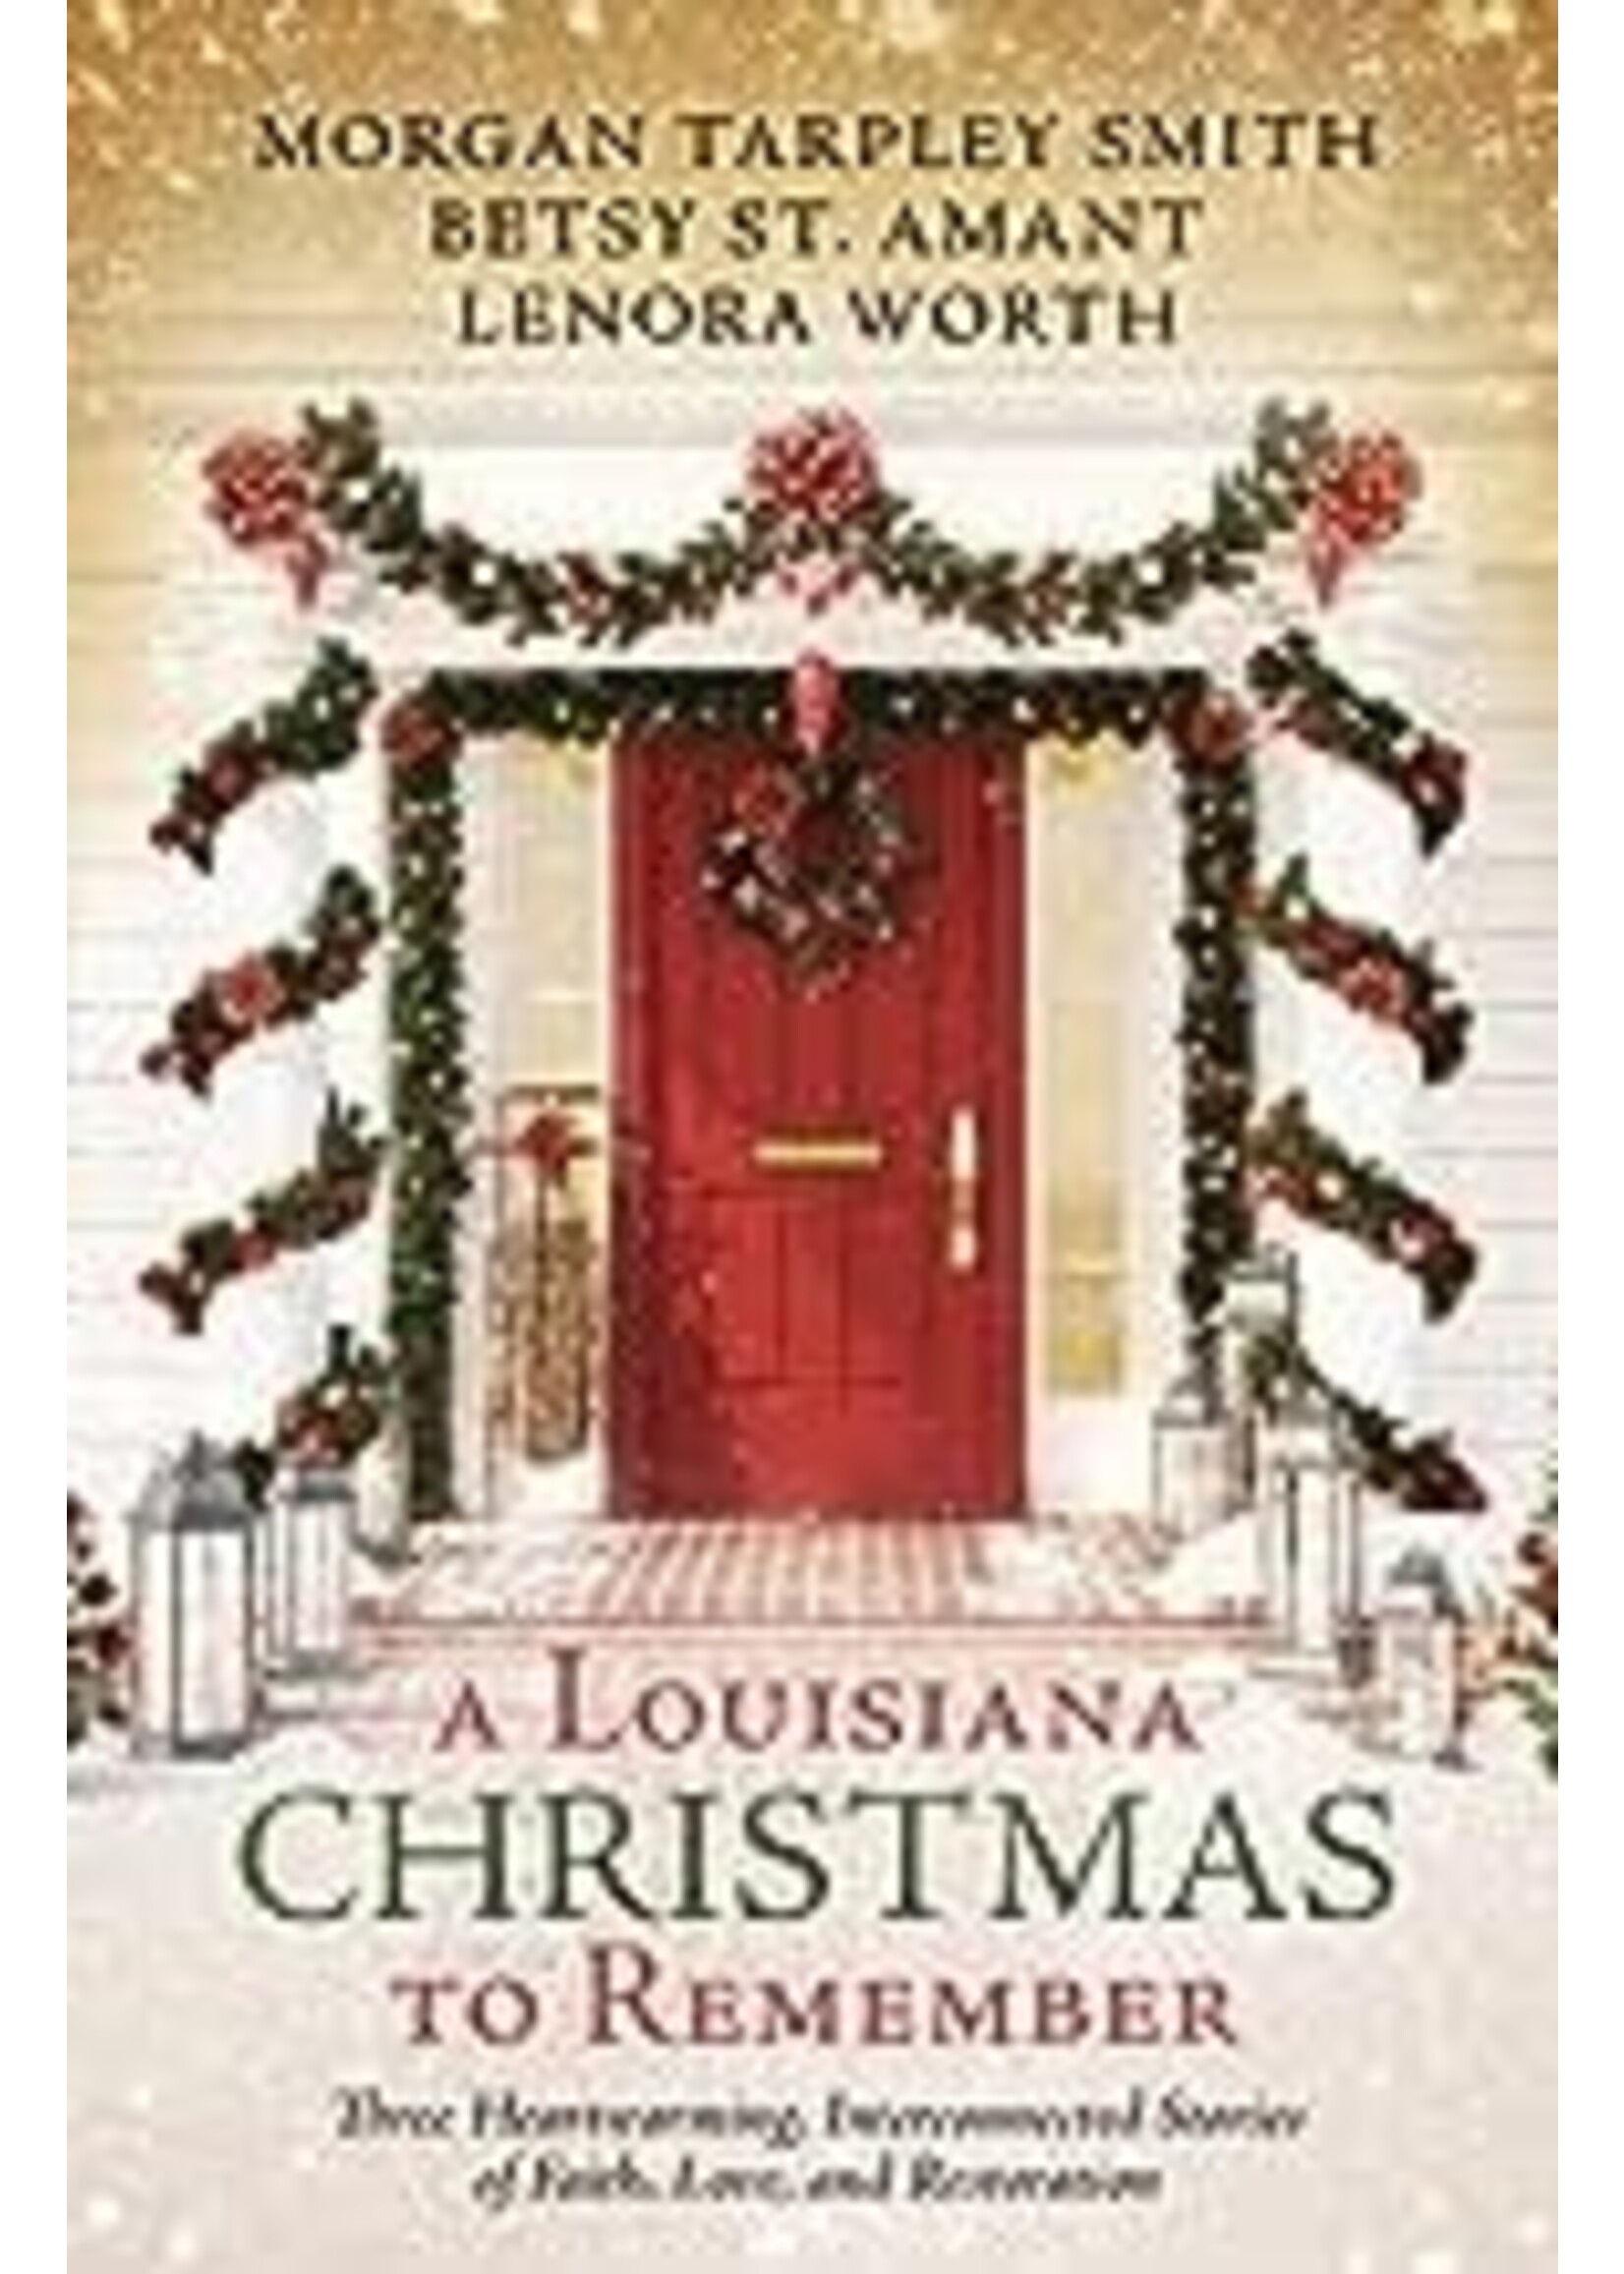 A Louisiana Christmas To Remember